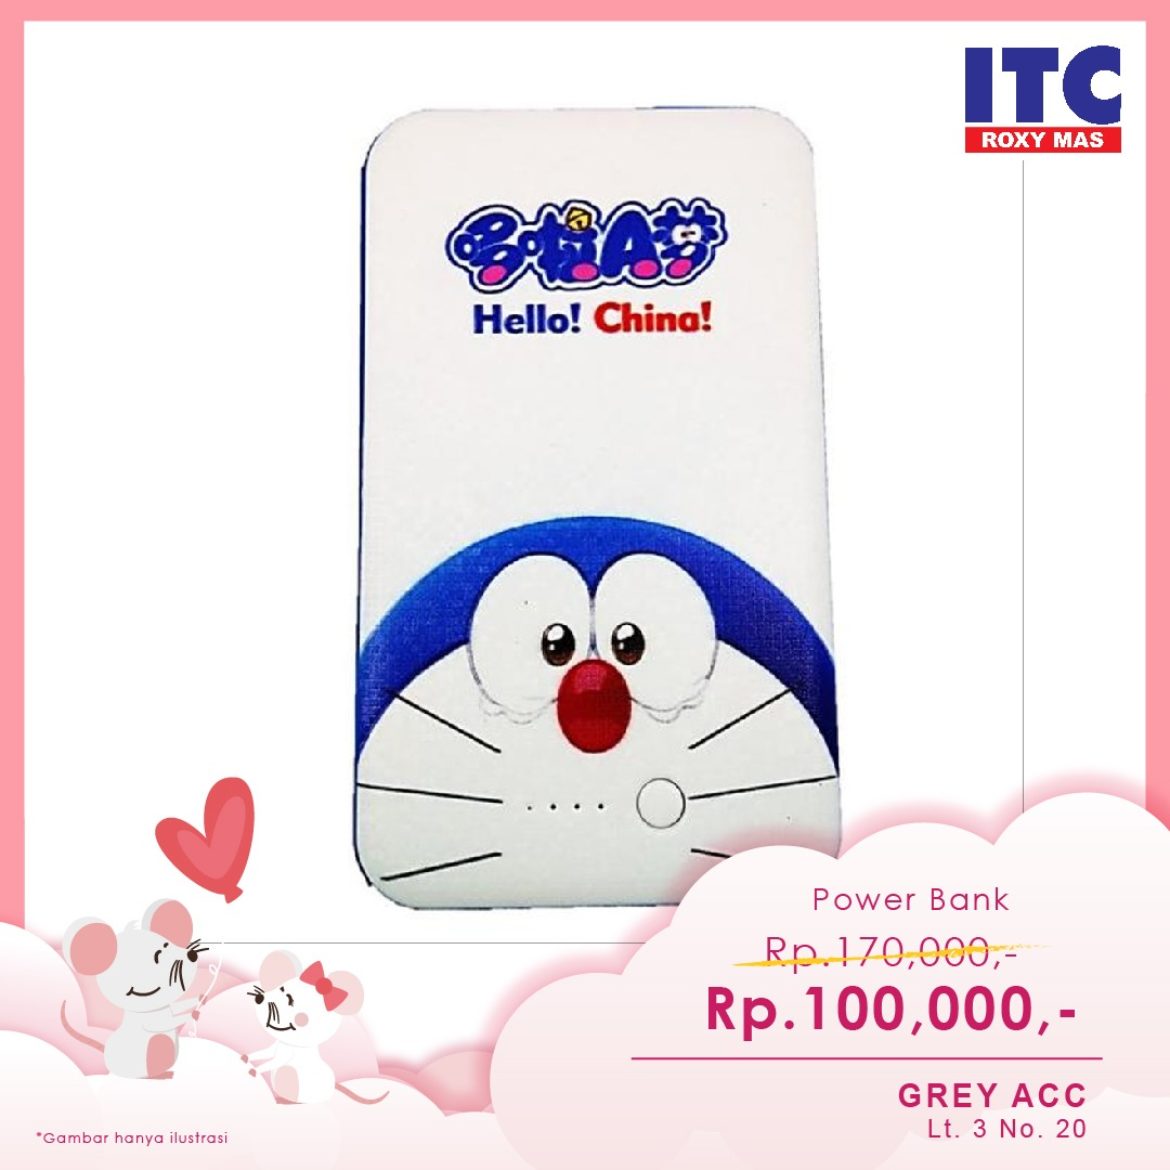 Power Bank Doraemon Dan Hello Kitty Cuma 100 Ribu Di ITC Roxy Mas ITC SHOPPING FESTIVAL